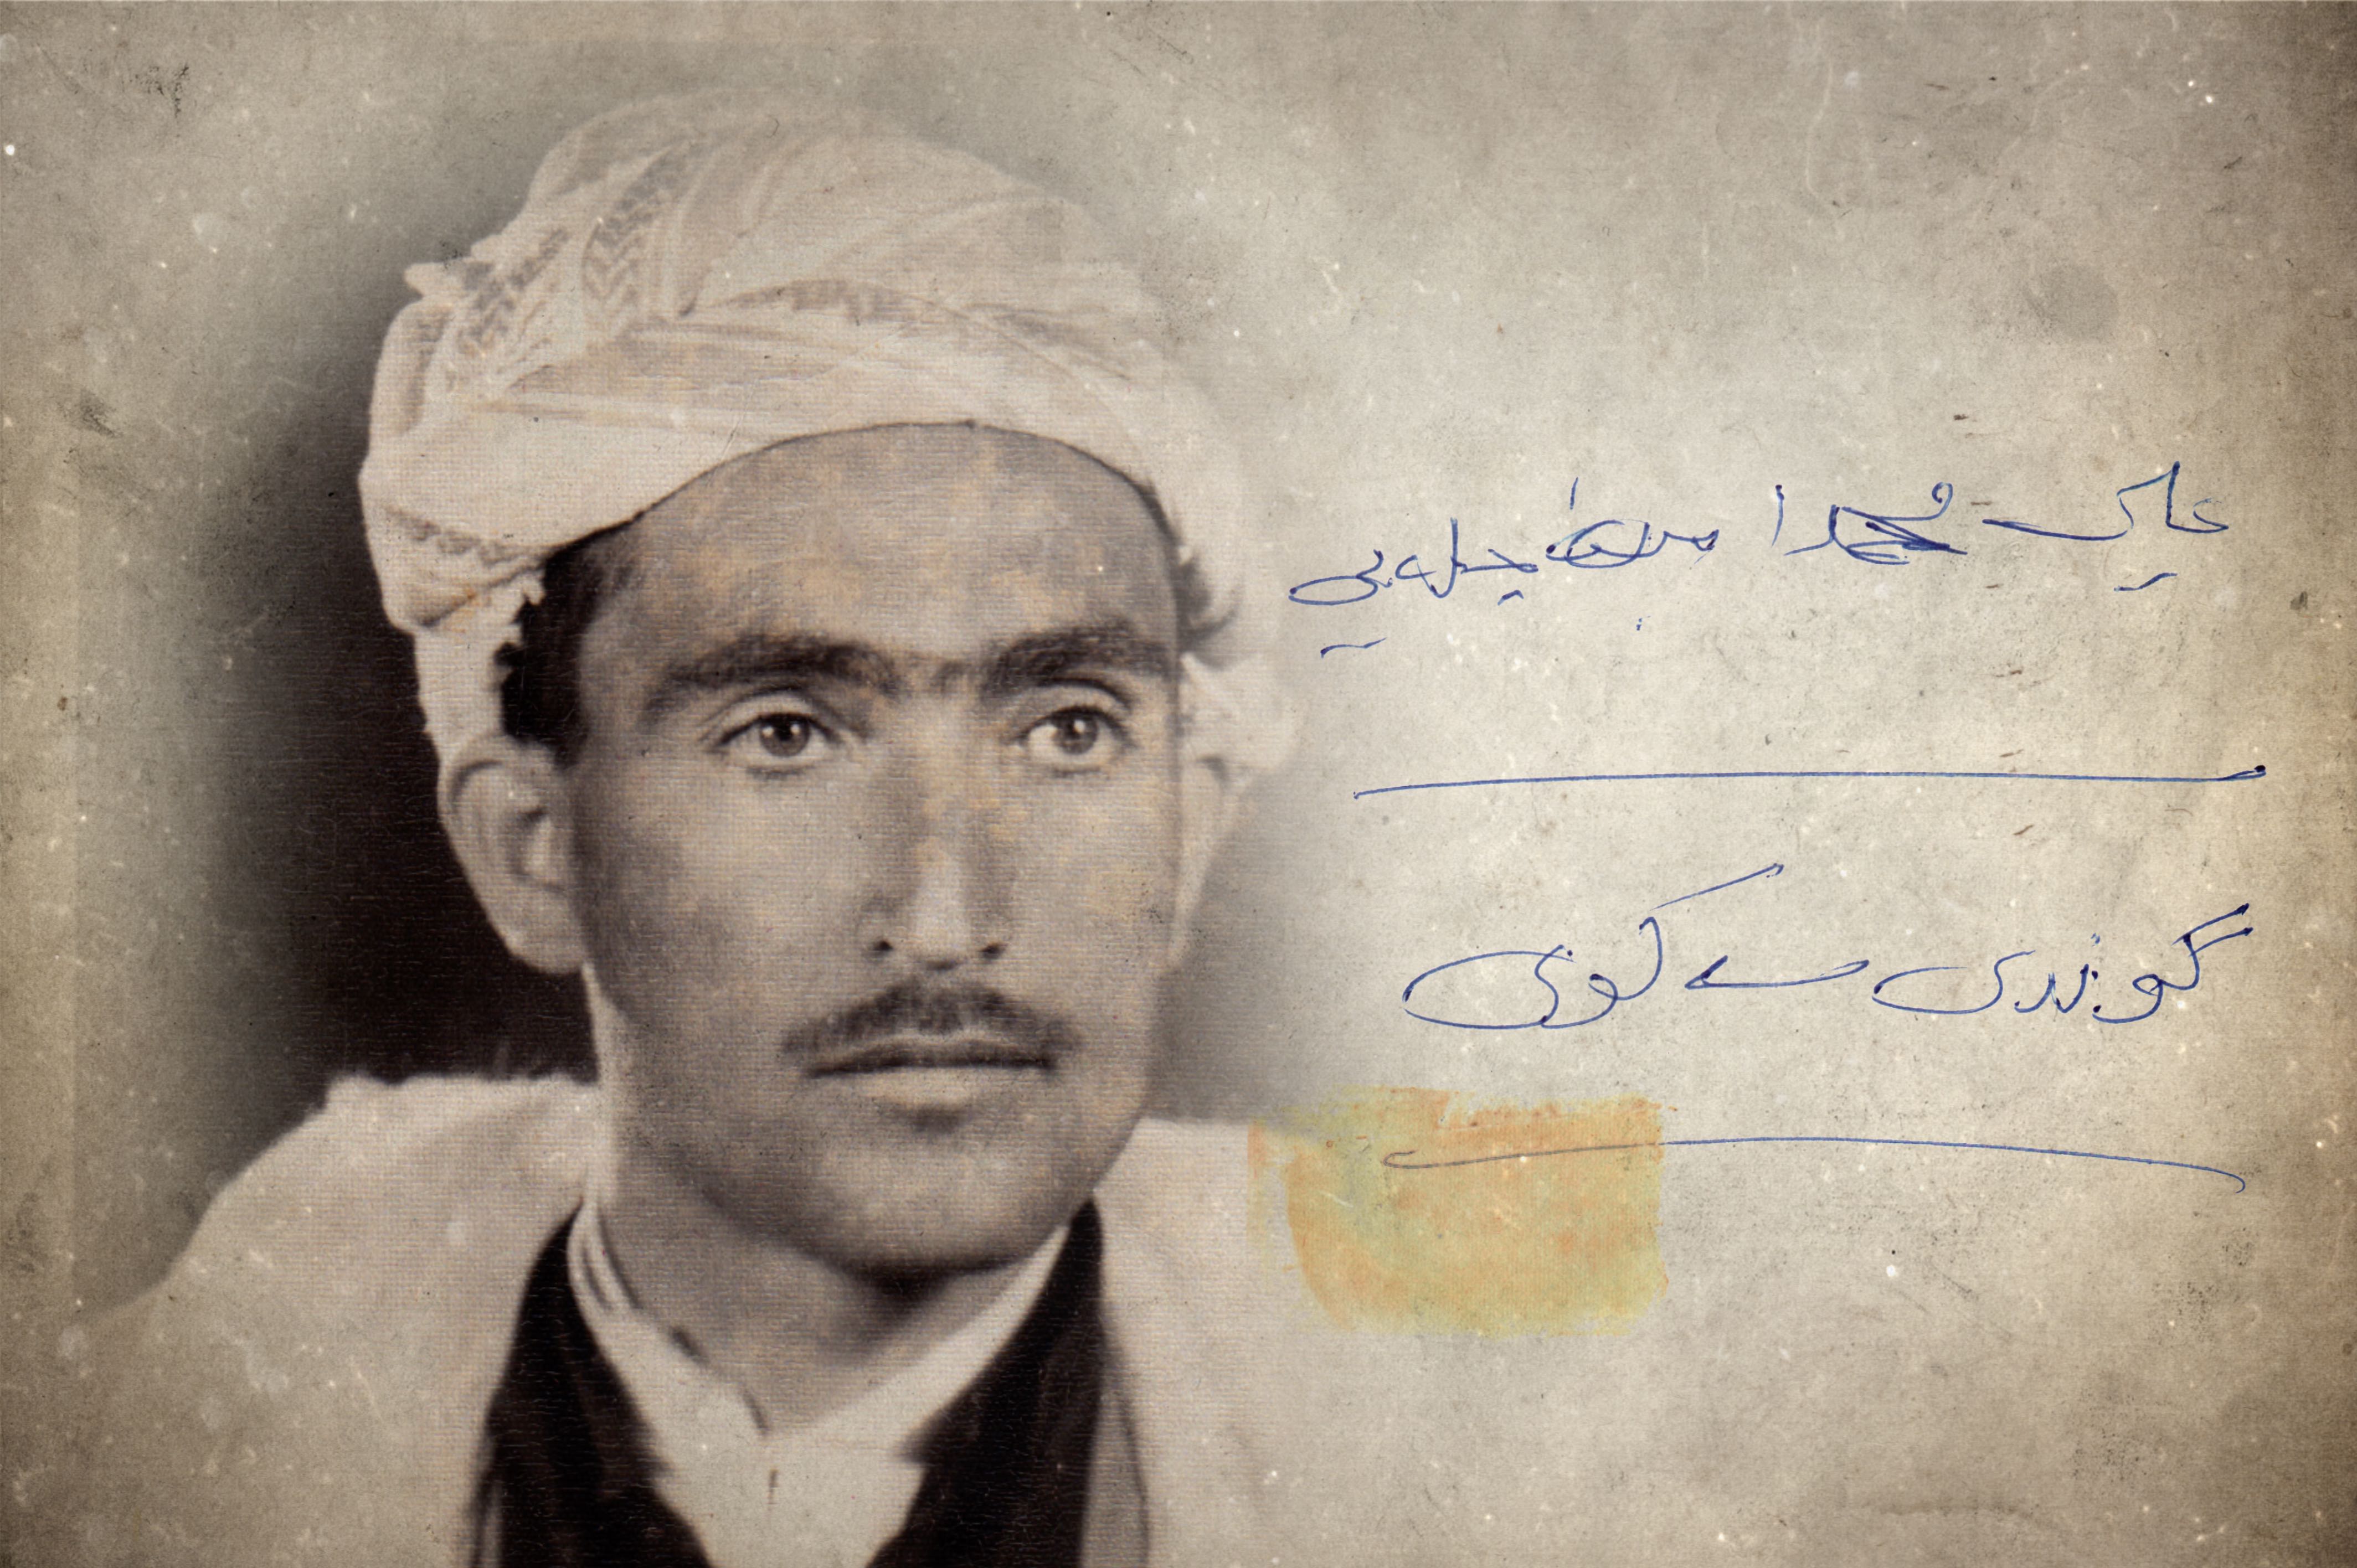 PORTRAITS OF THE MISSING BARZANI MEN